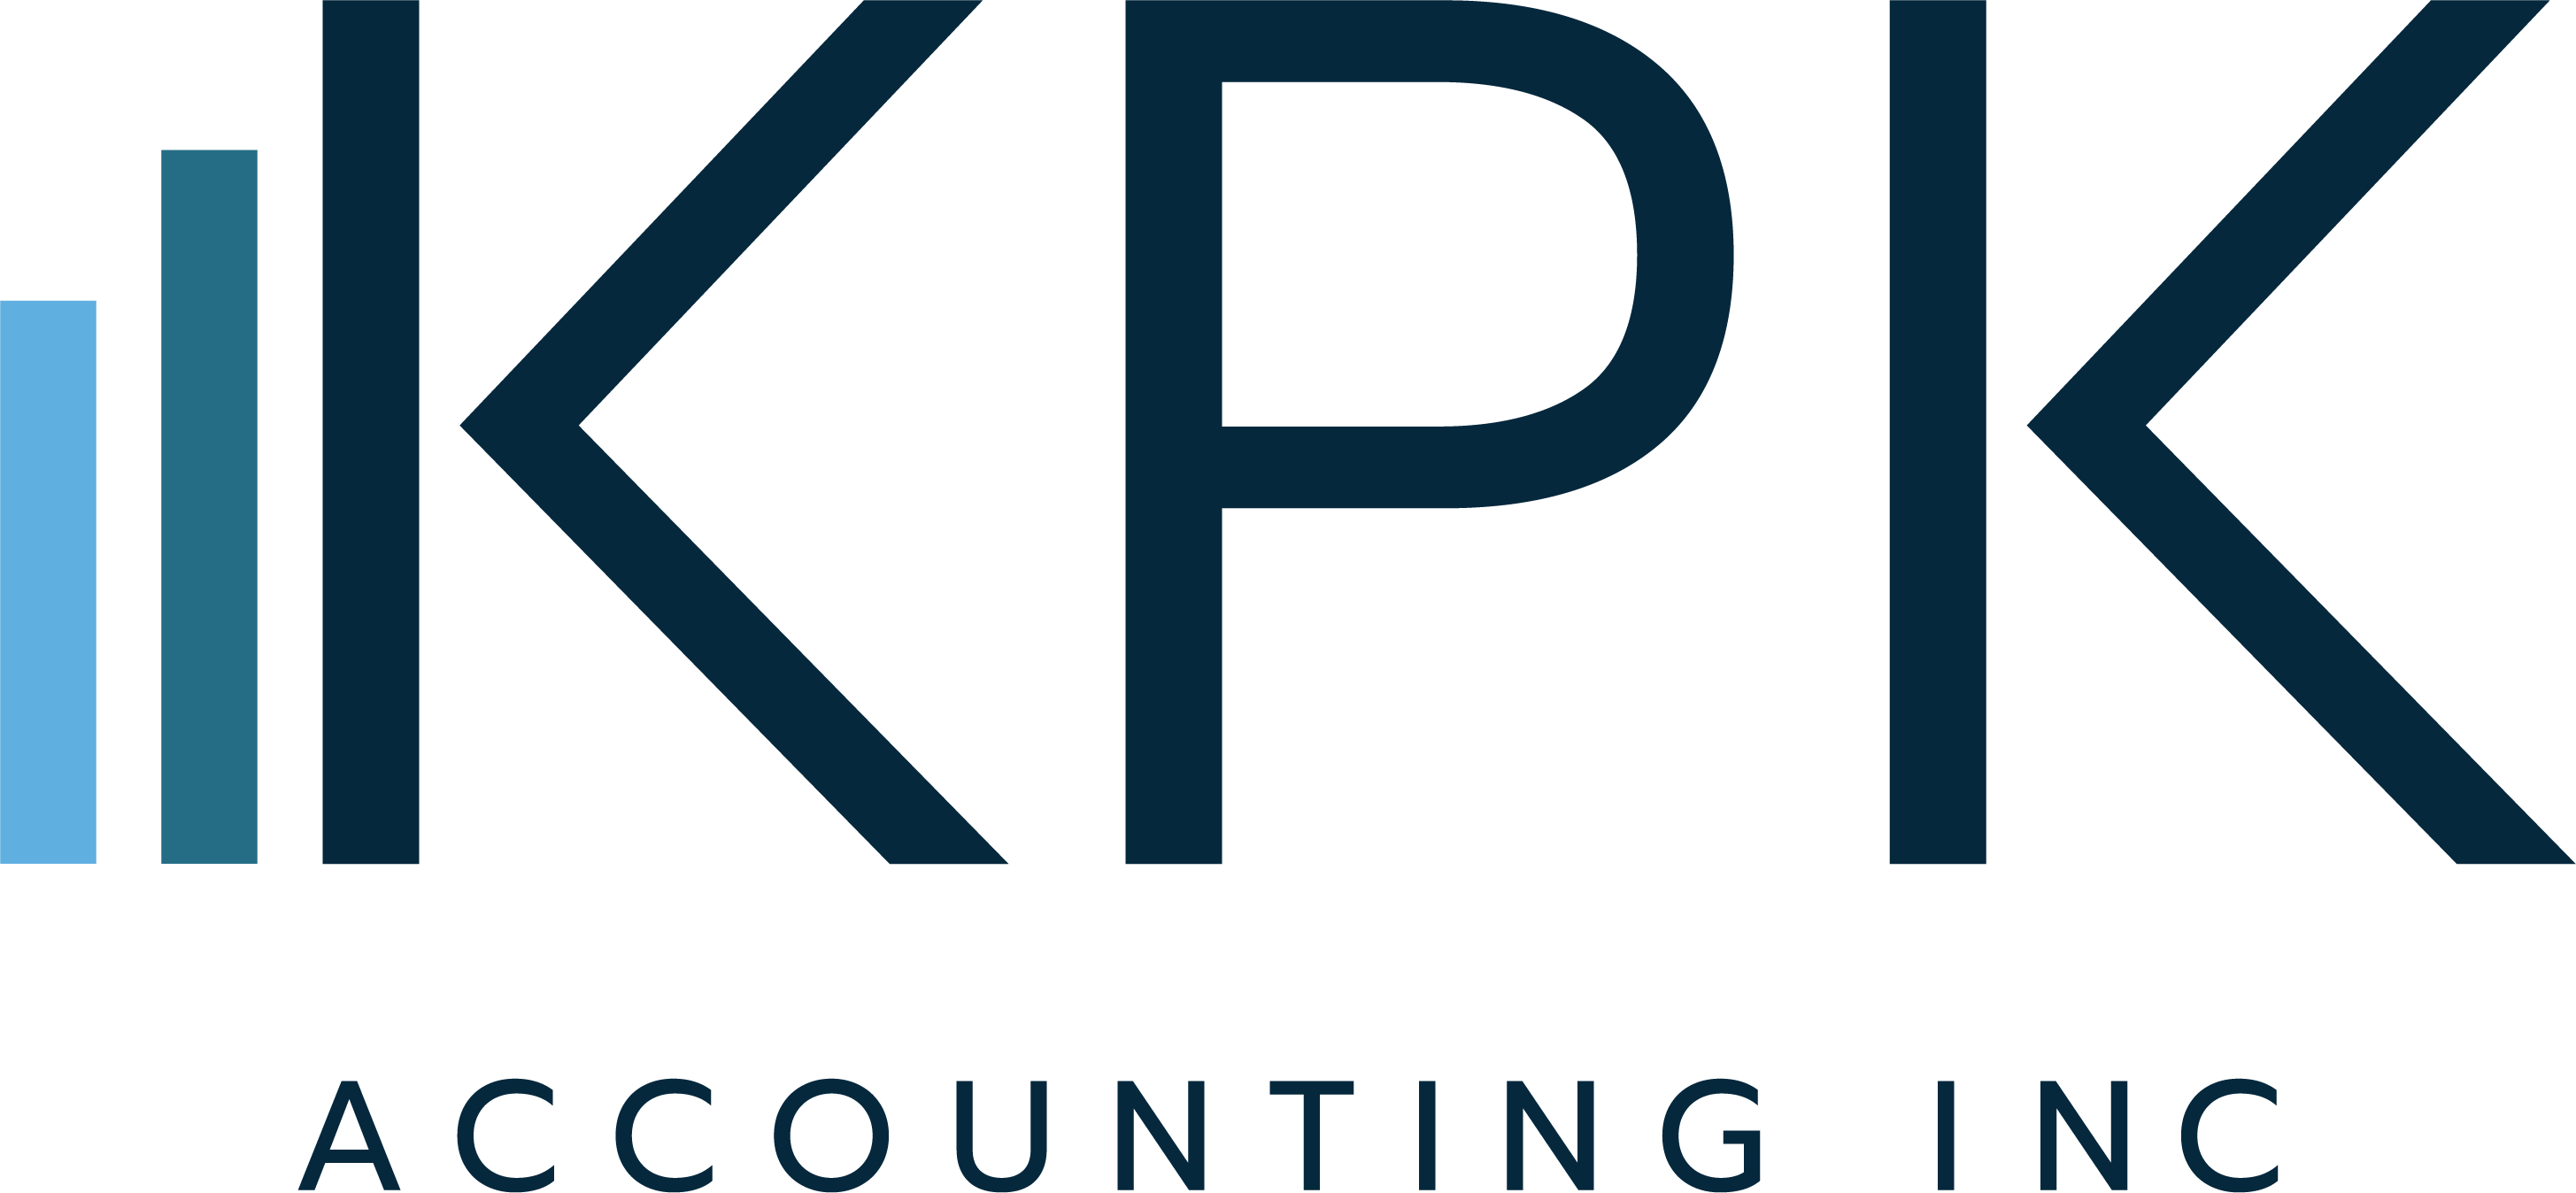 KPK Accounting Logo, colour